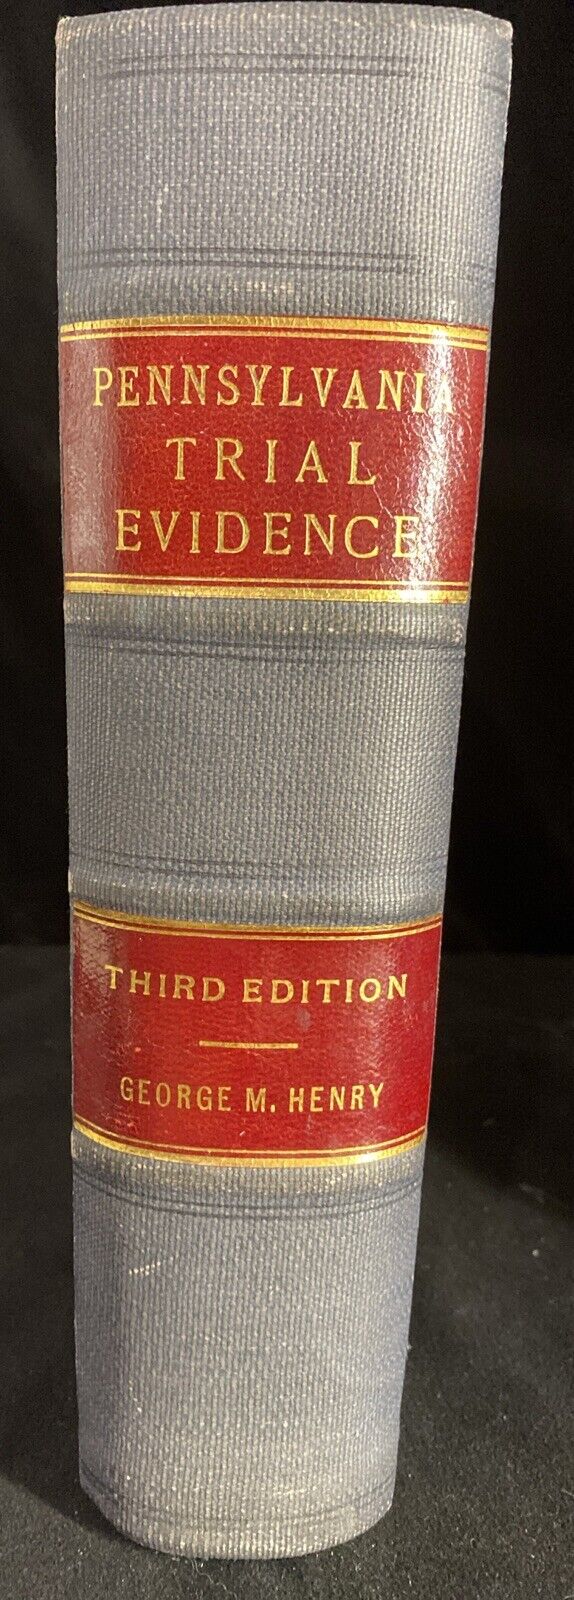 Pennsylvania Trial Evidence  Third  Edition 1940 George M. Henry